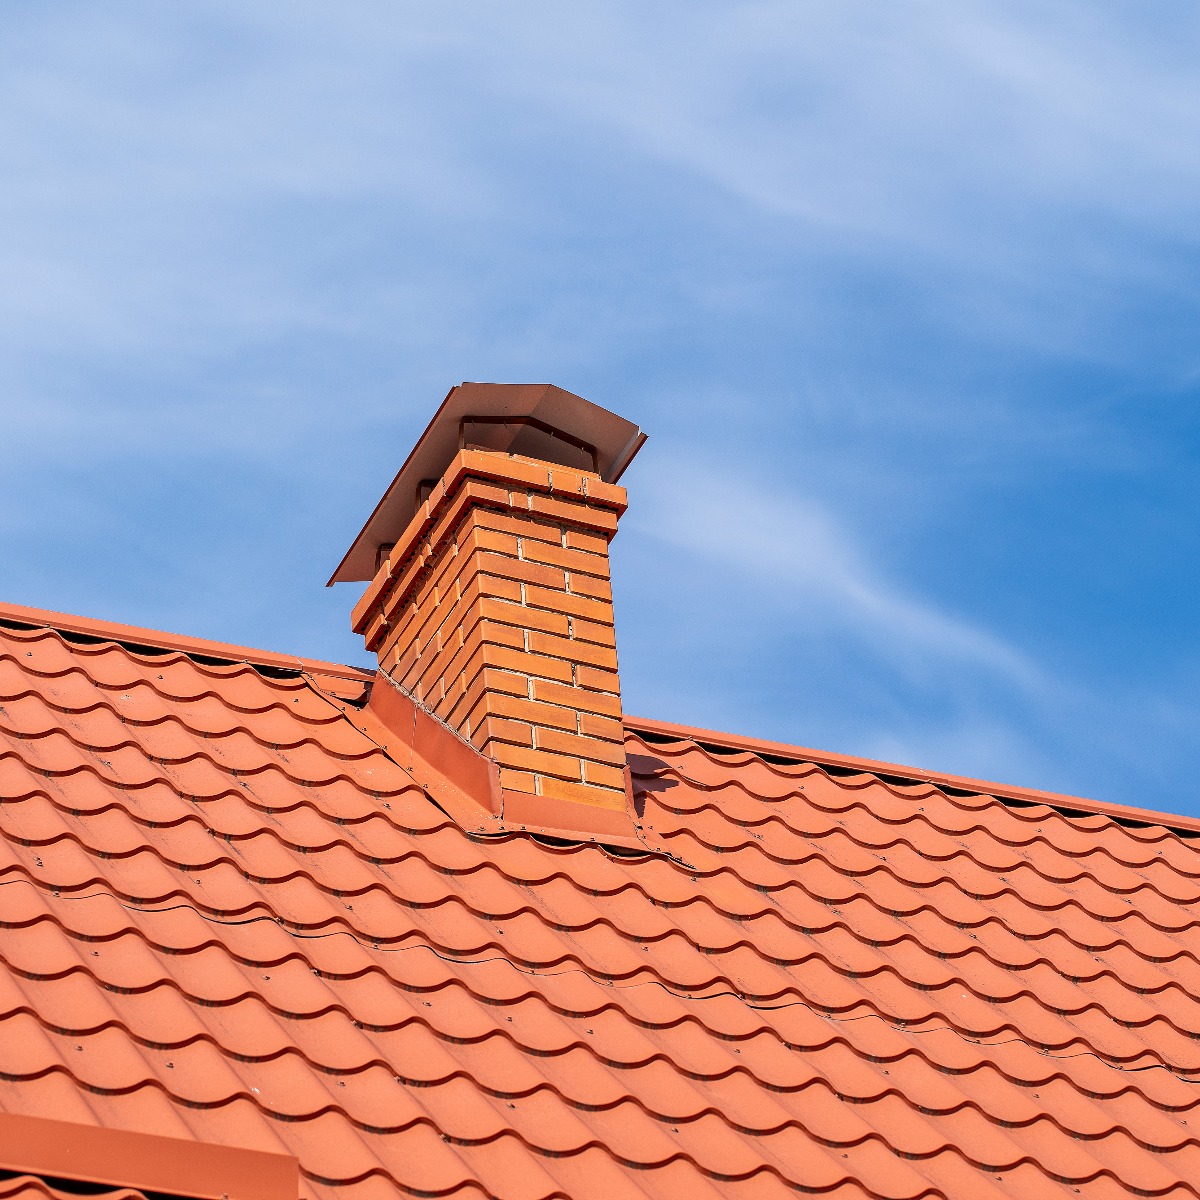 chimney on Spanish tile roof